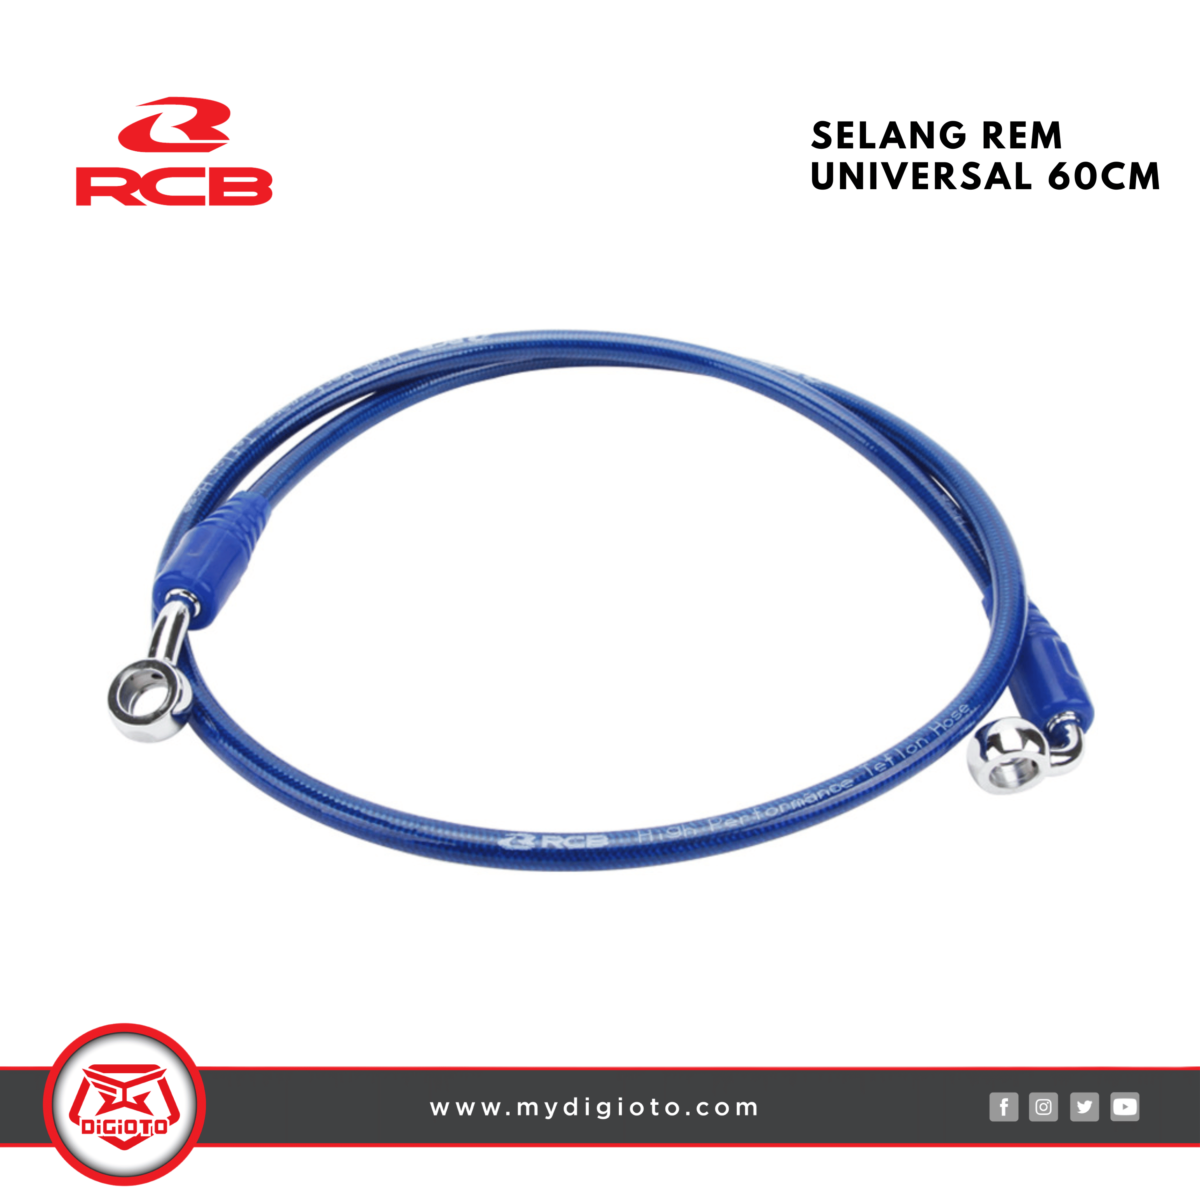 selang rem rcb 60cm biru